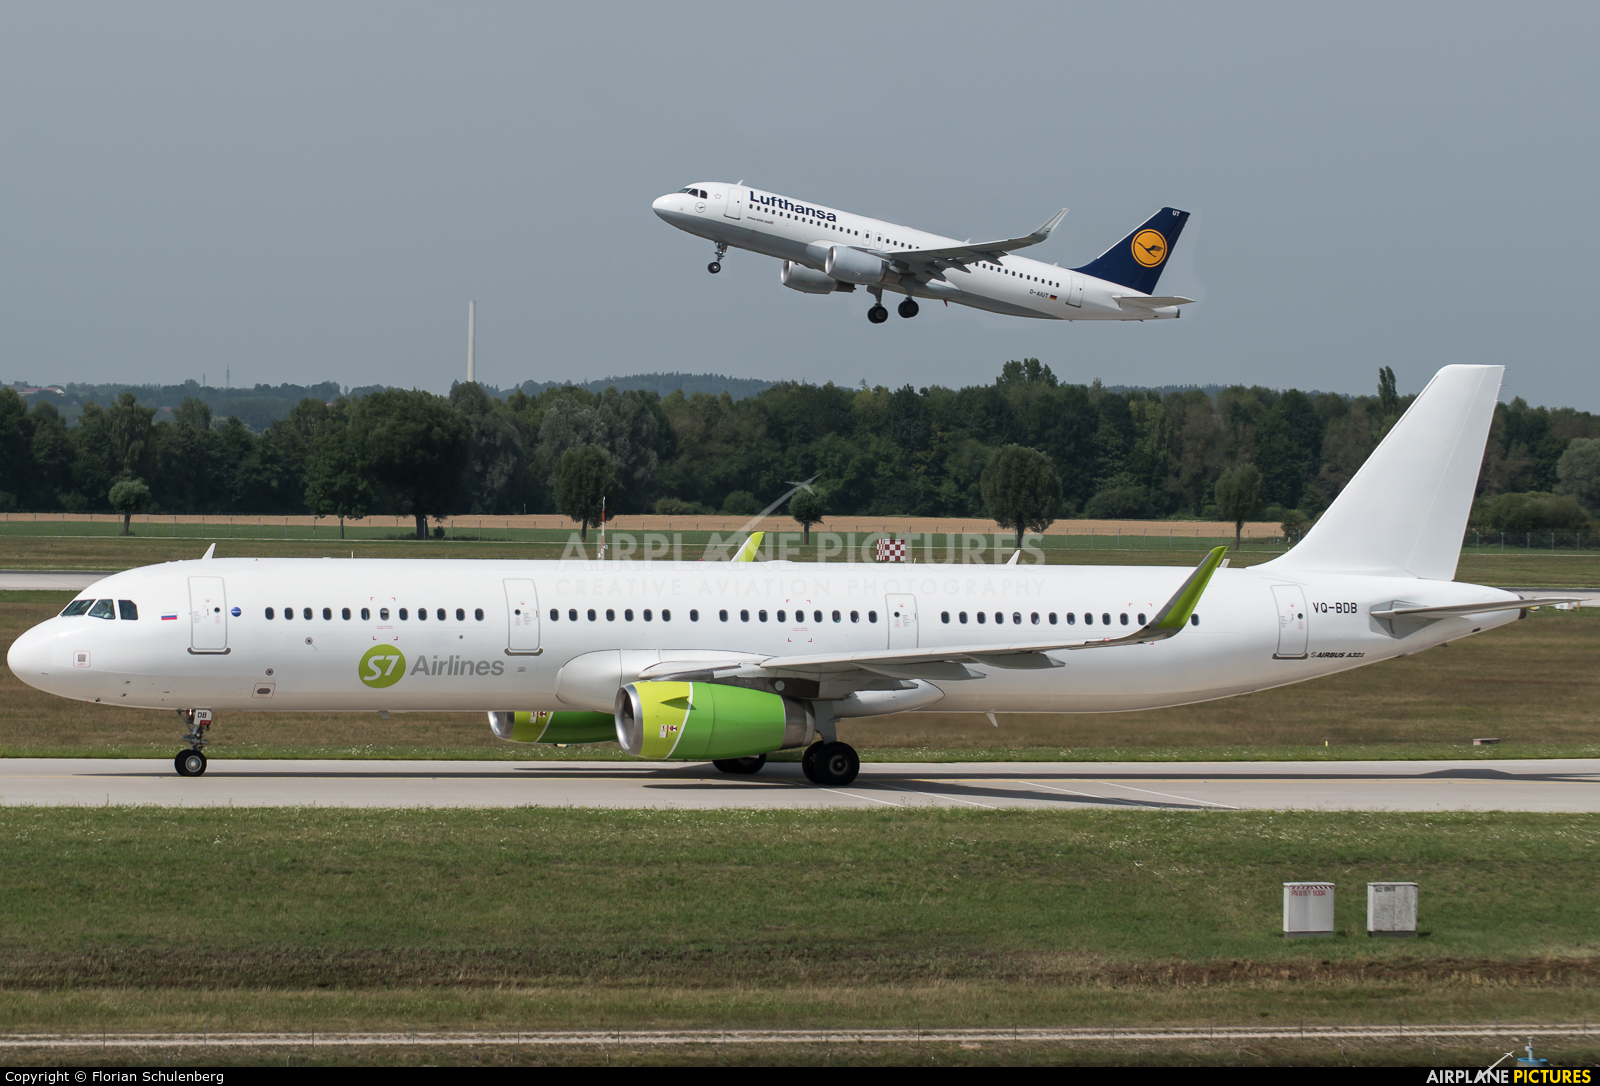 S7 Airlines VQ-BDB aircraft at Munich